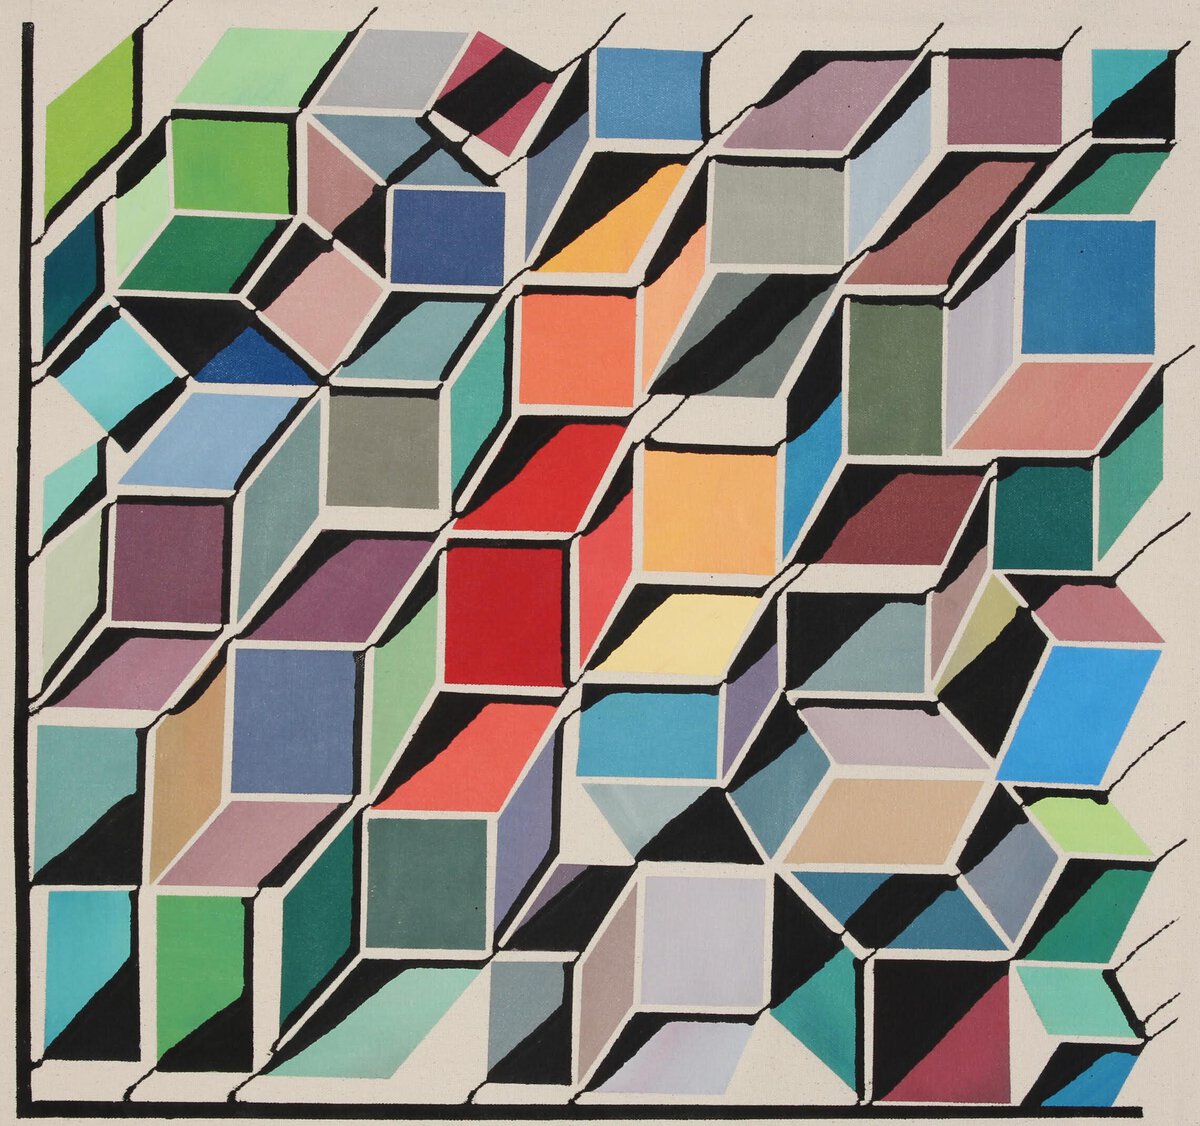 Jean Alexander Frater; parallelograms to volumes 1; 2015